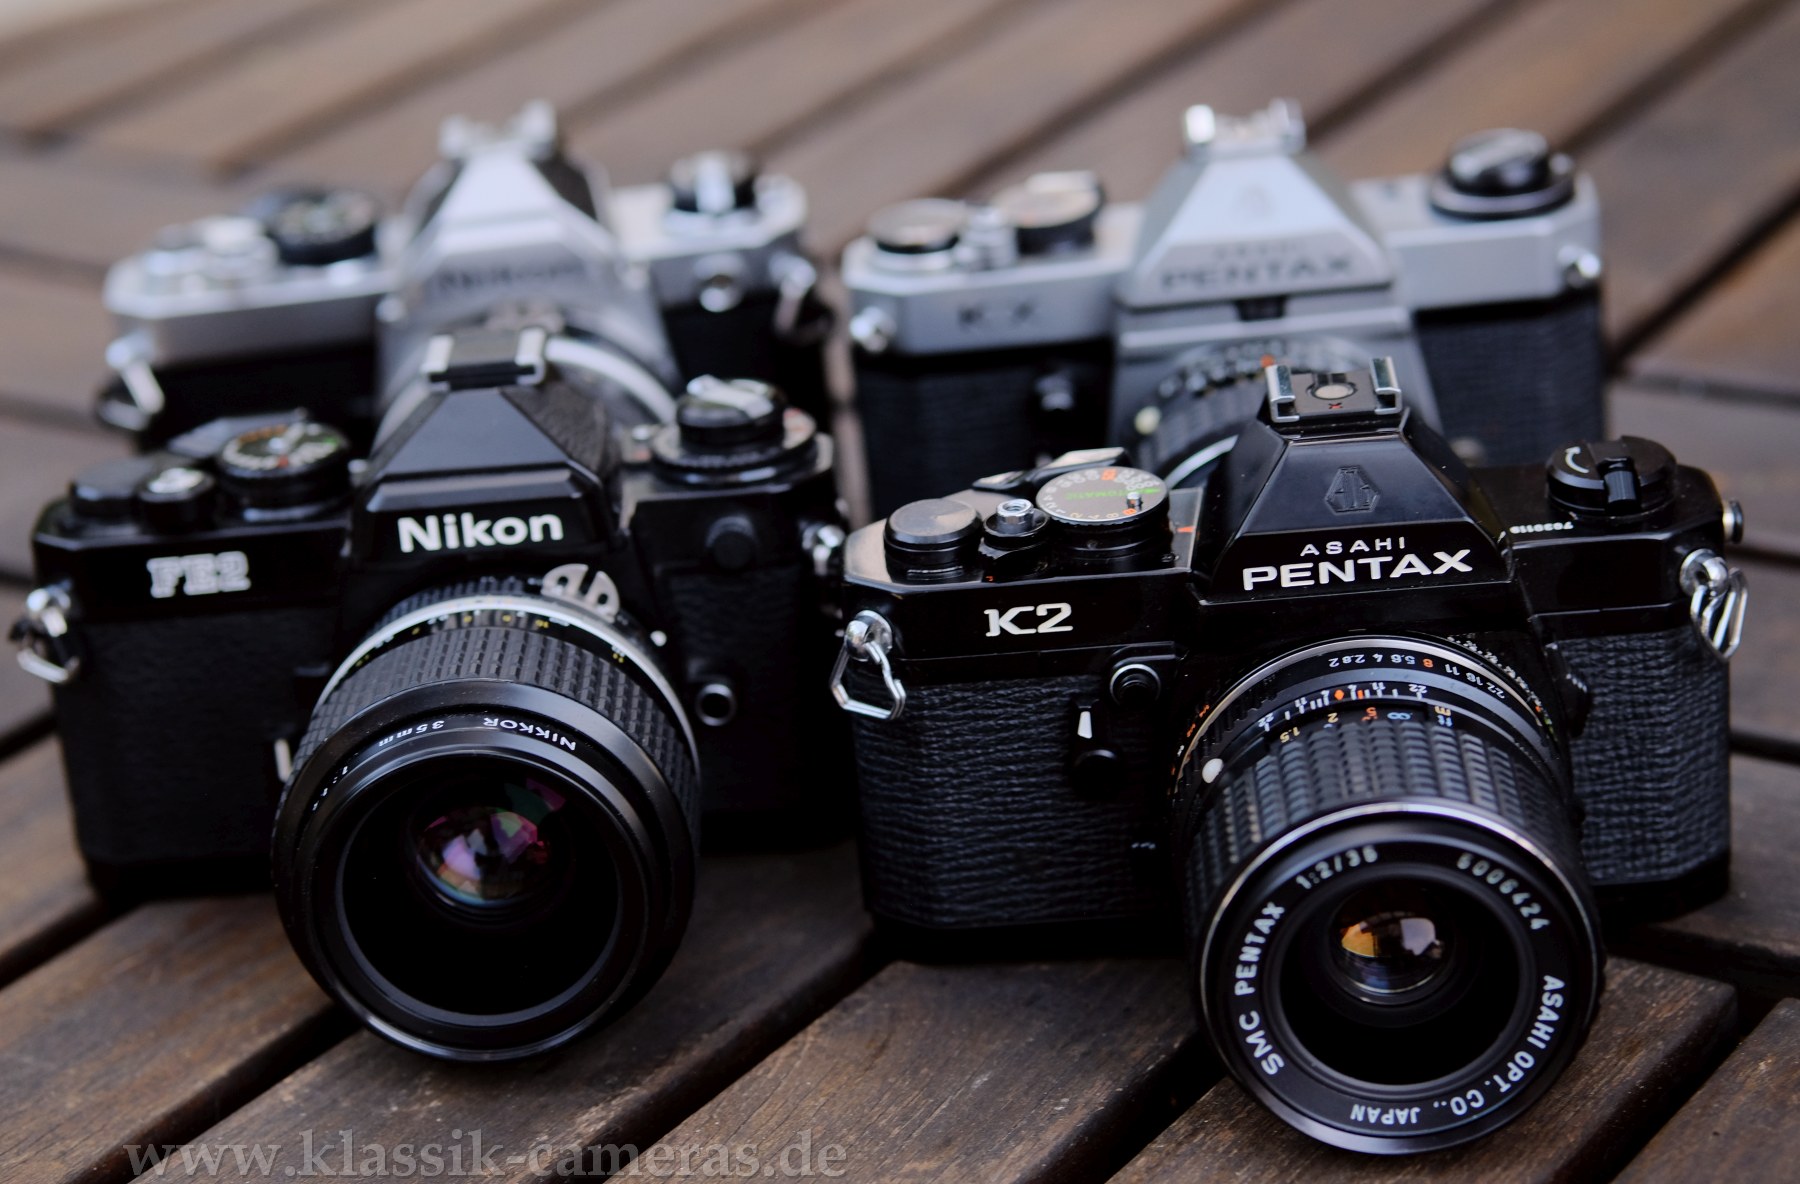 Pentax K2 with Nikon
          FE2